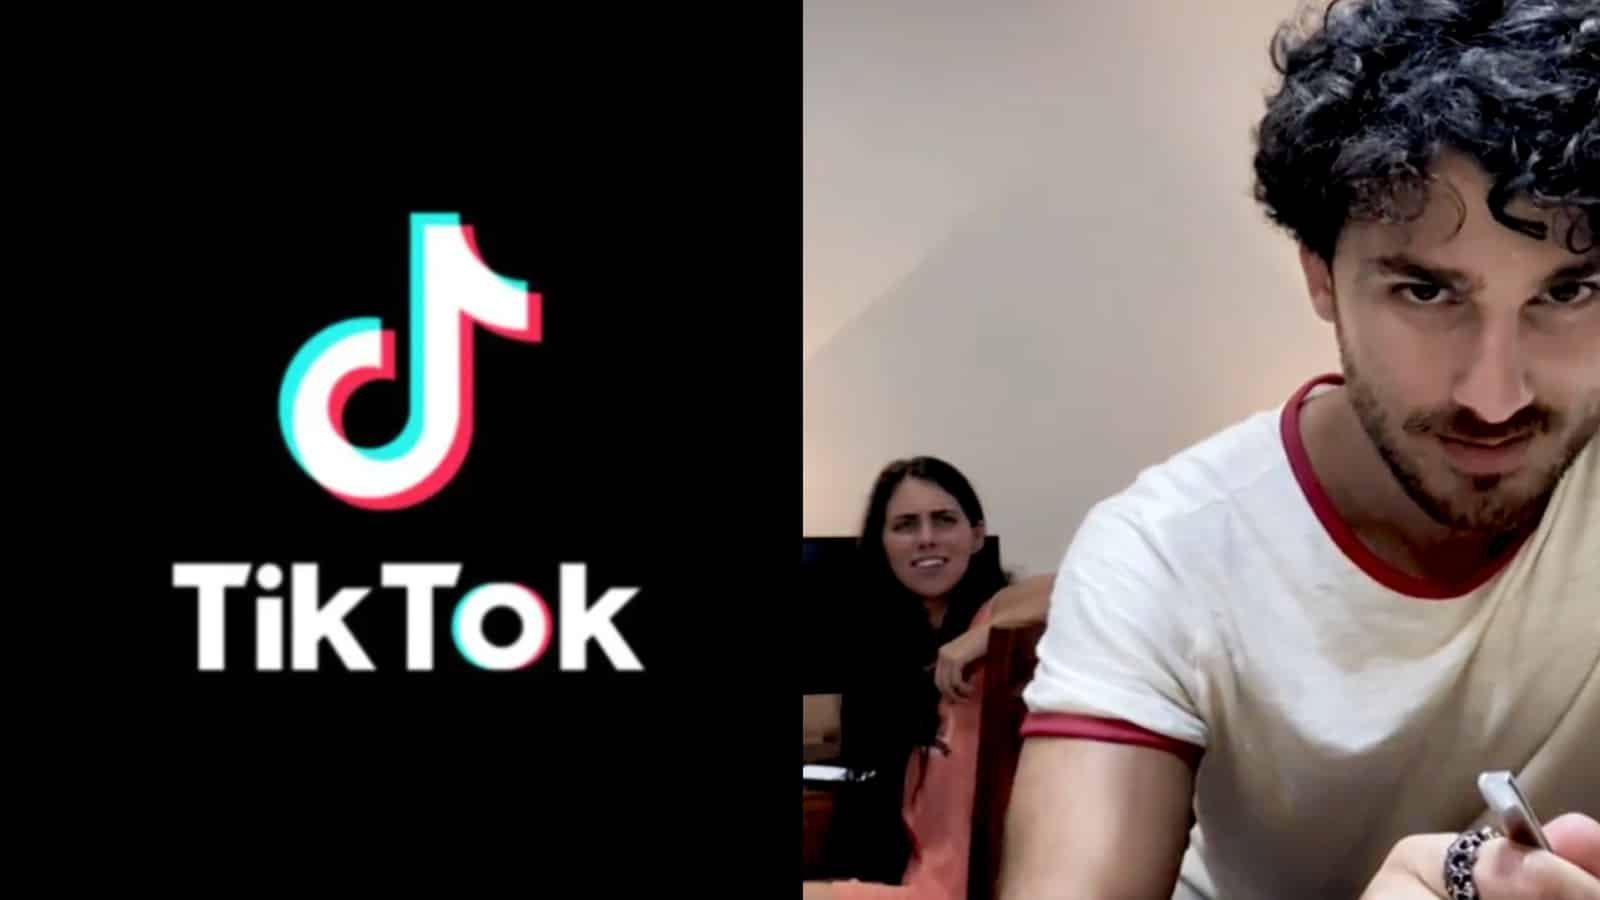 TikTok user doing the 'Candice' prank next to the TikTok logo